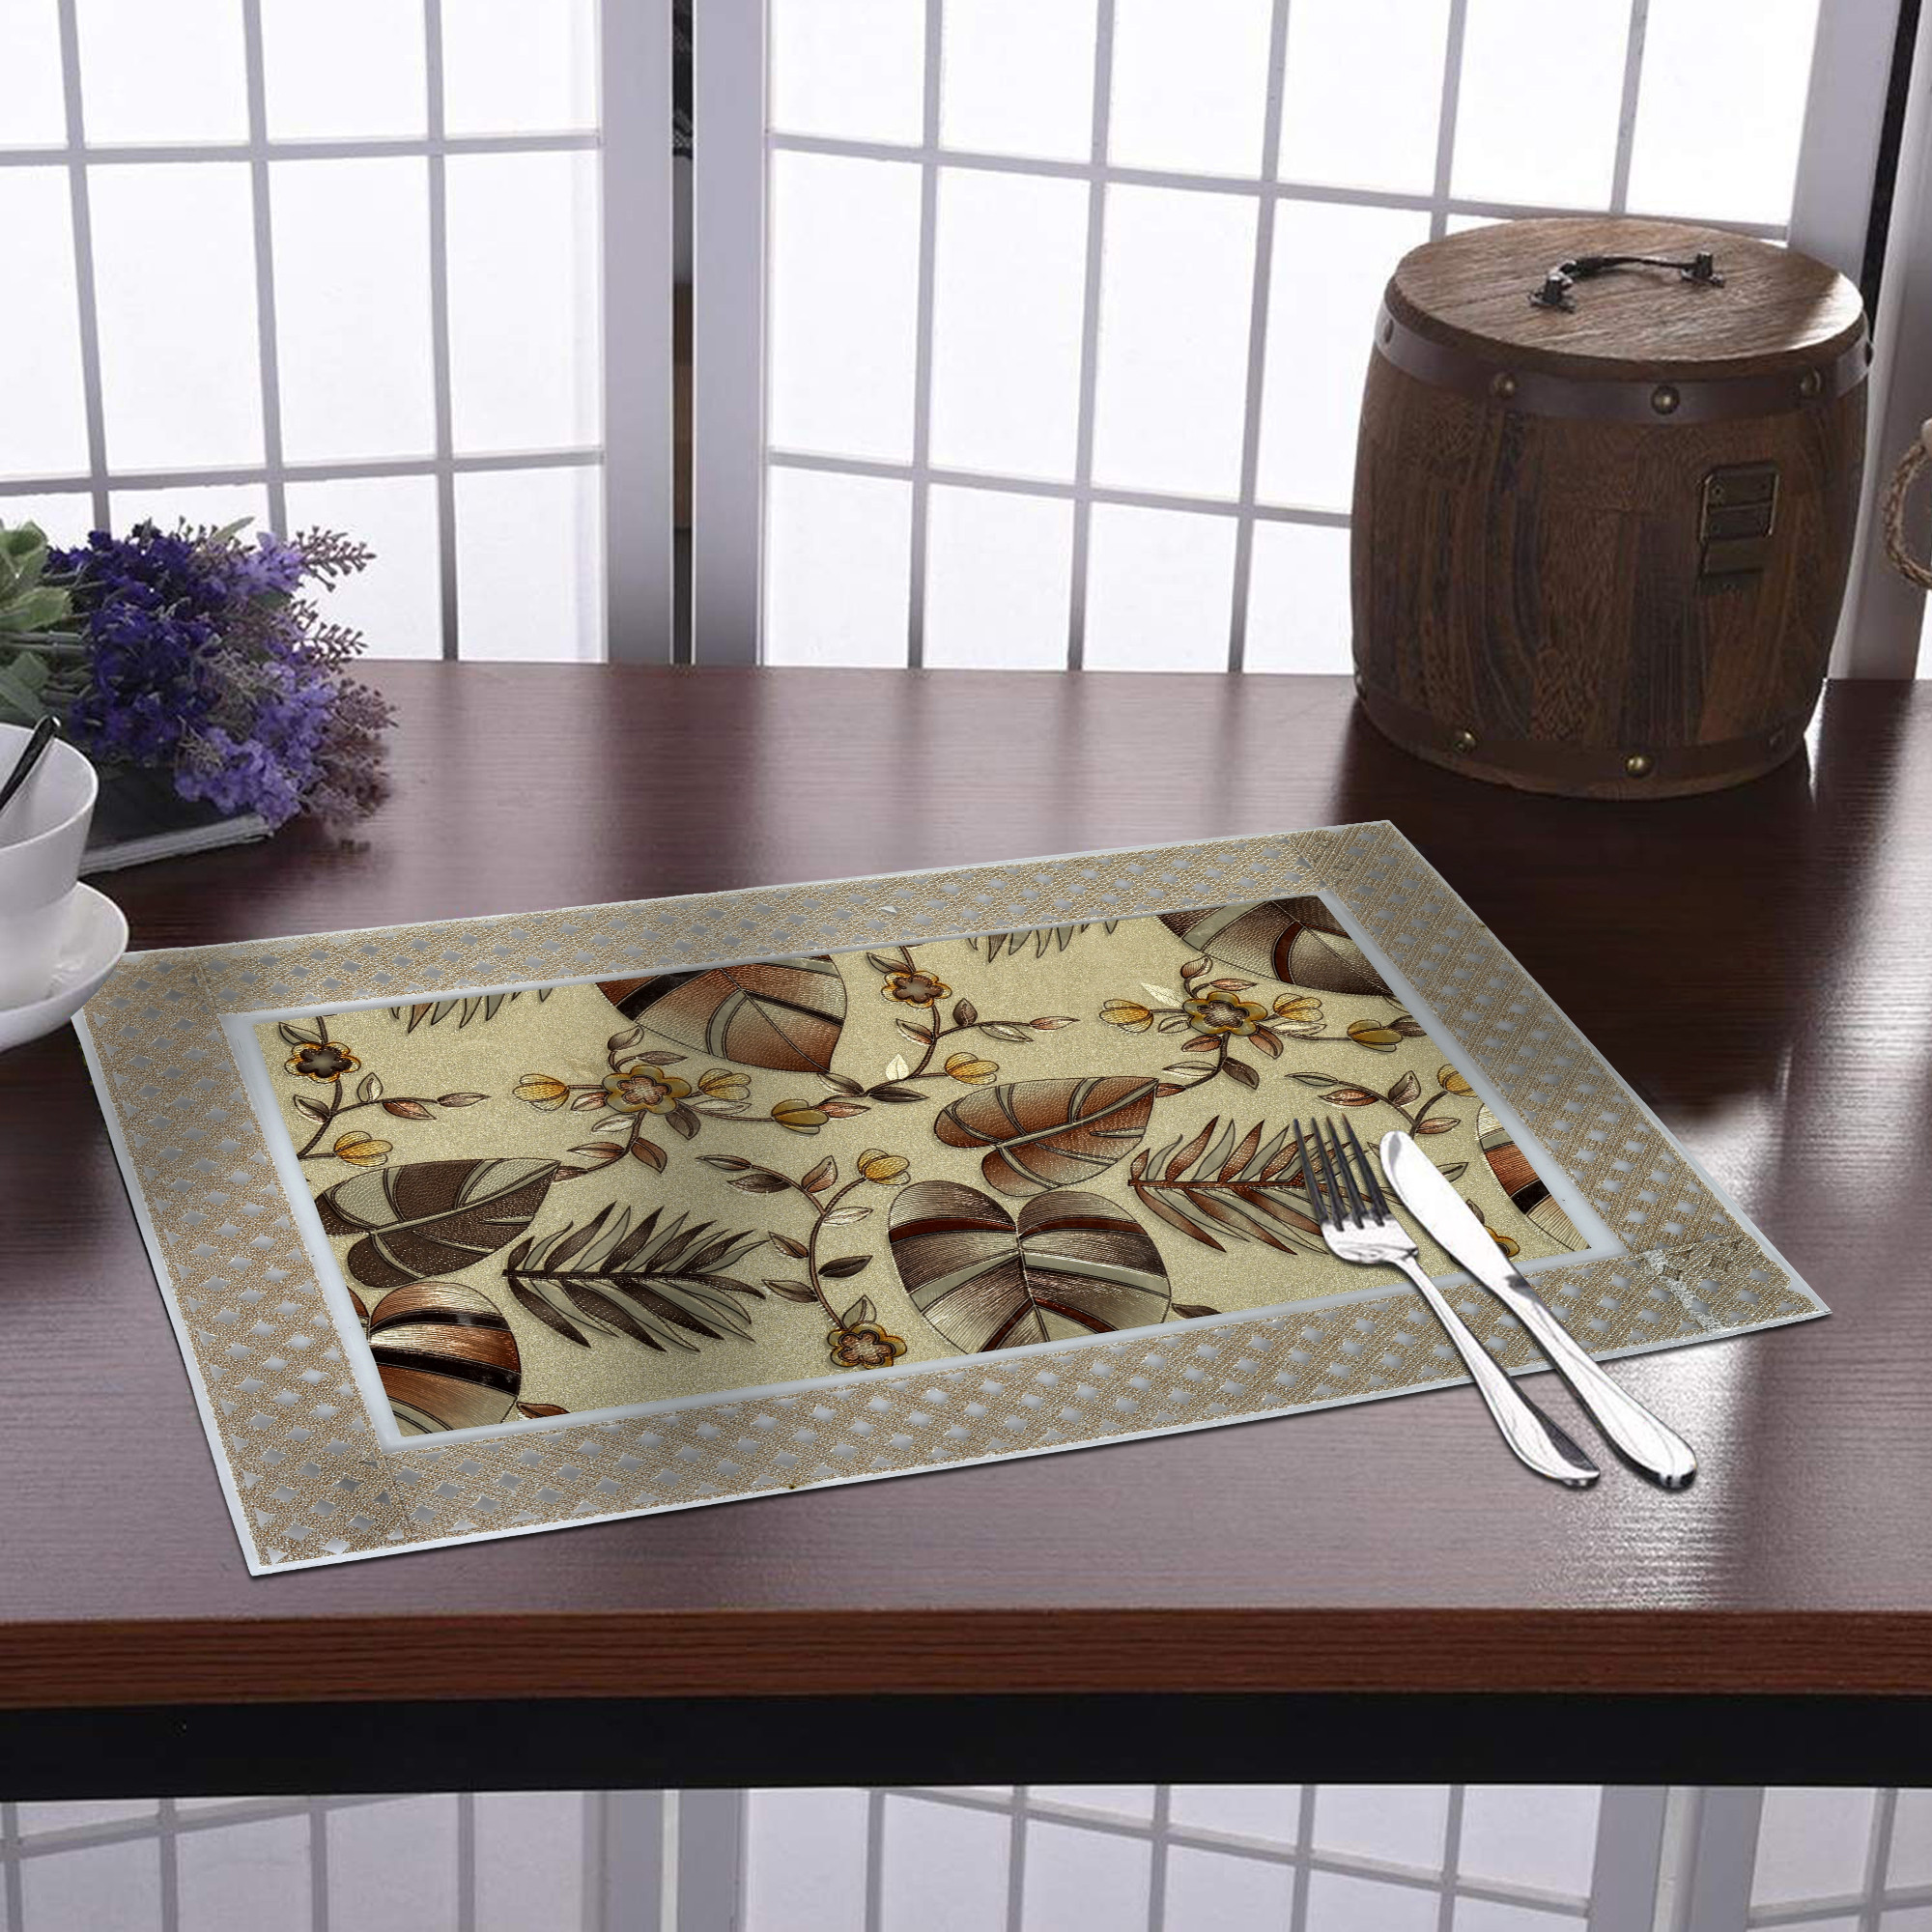 Kuber Industries Leaf Design PVC Dining Table Placemat Set, Set of 6 (Gold)